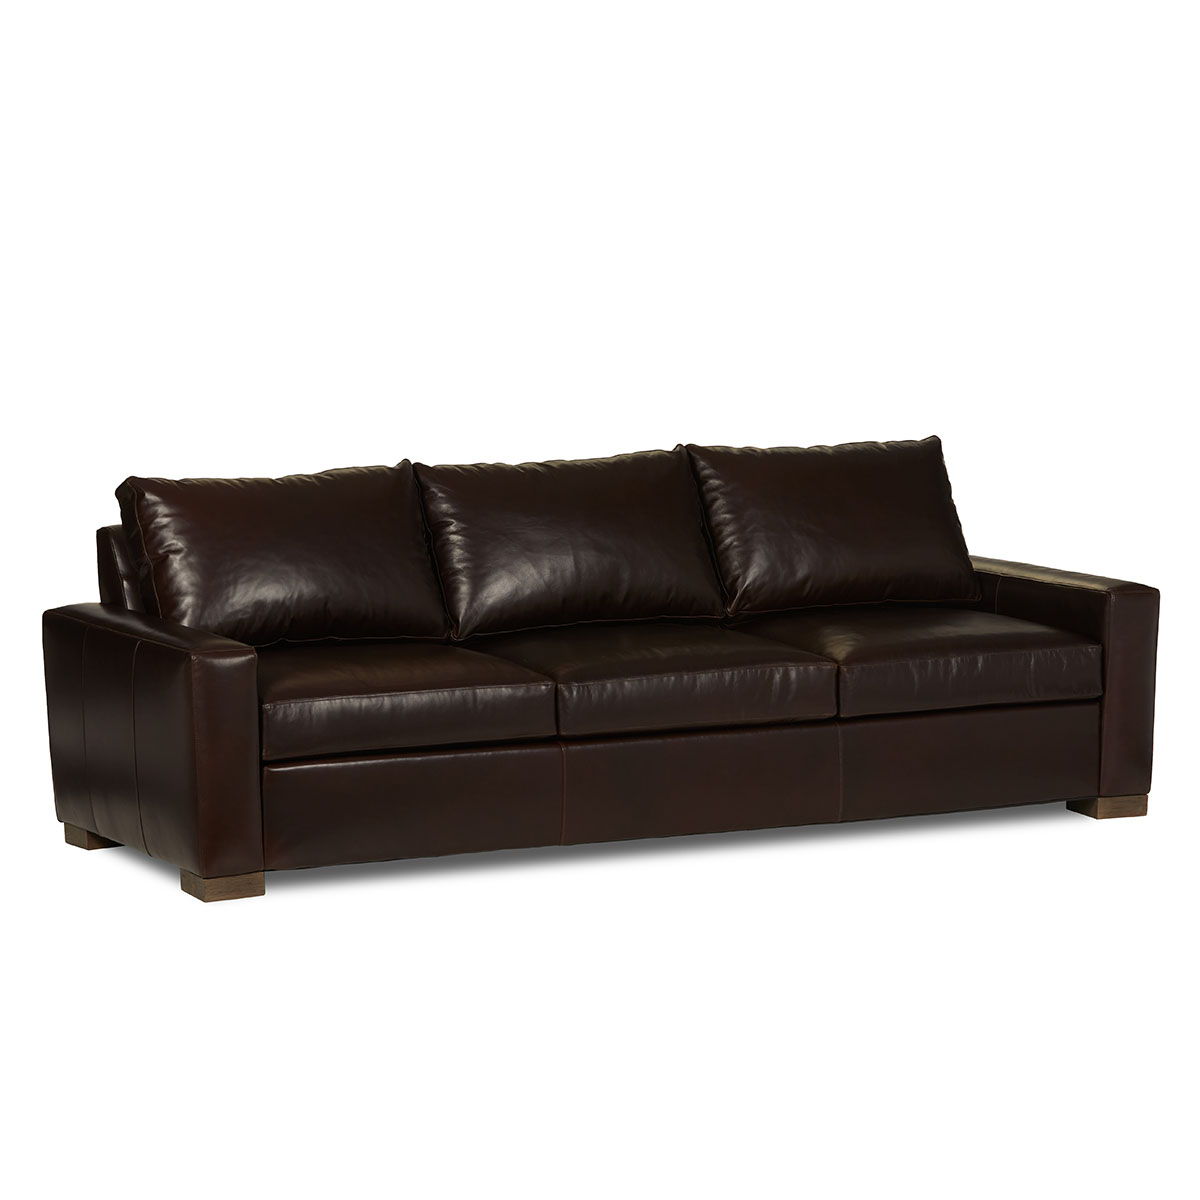 Classic Custom - Rivera Large Sofa With Track Arm Lawson Leather - Fudge